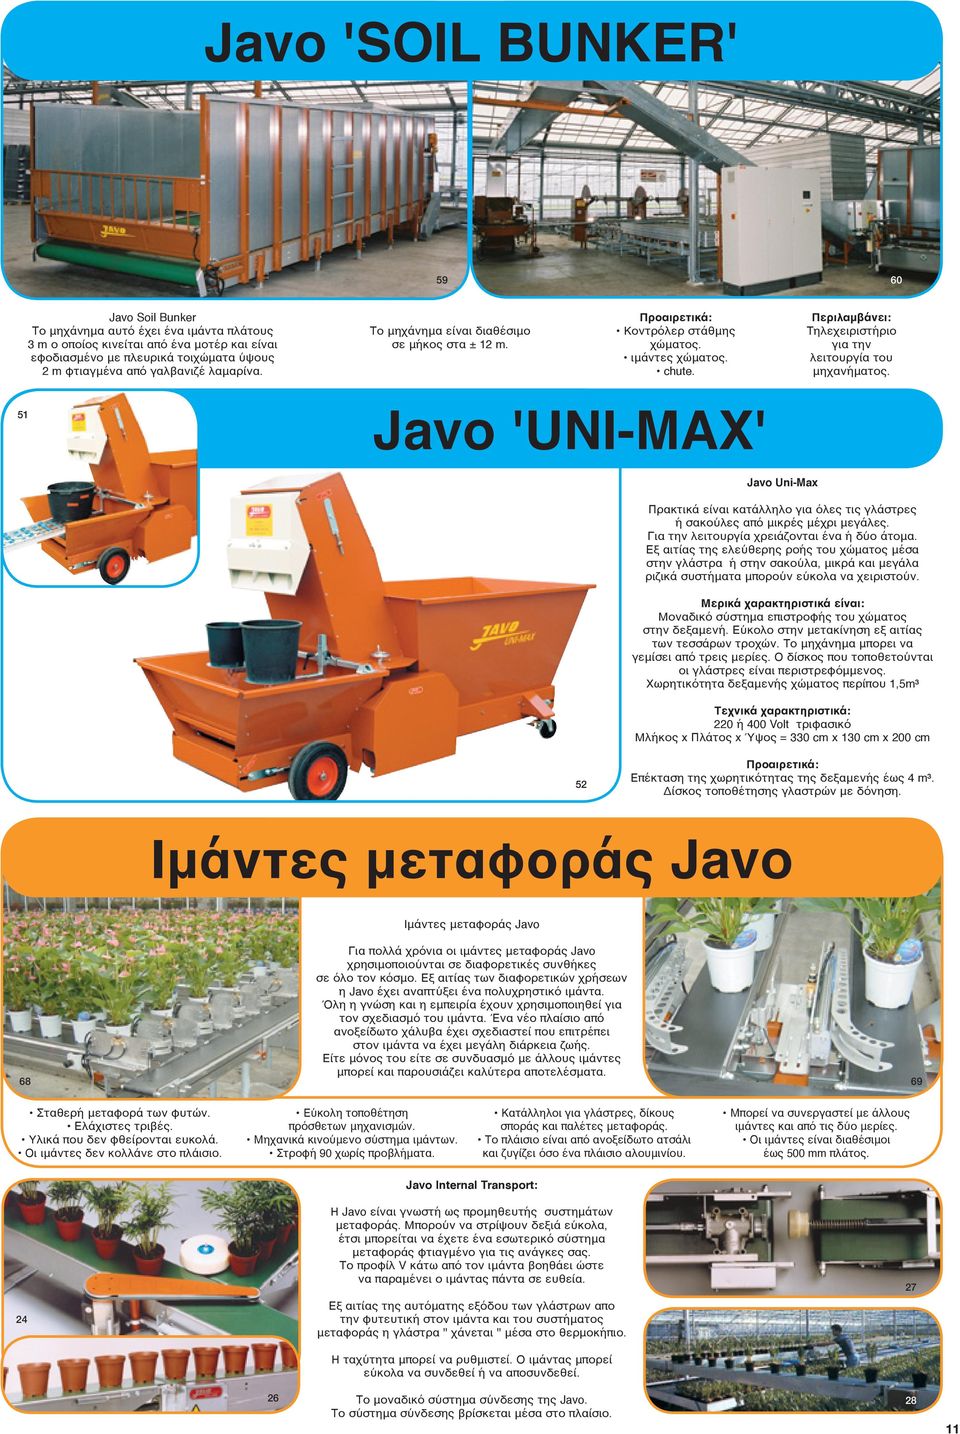 51 Javo 'UNI-MAX' Javo Uni-Max Πρακτικά είναι κατάλληλο για όλες τις γλάστρες ή σακούλες από μικρές μέχρι μεγάλες. Για την λειτουργία χρειάζονται ένα ή δύο άτομα.